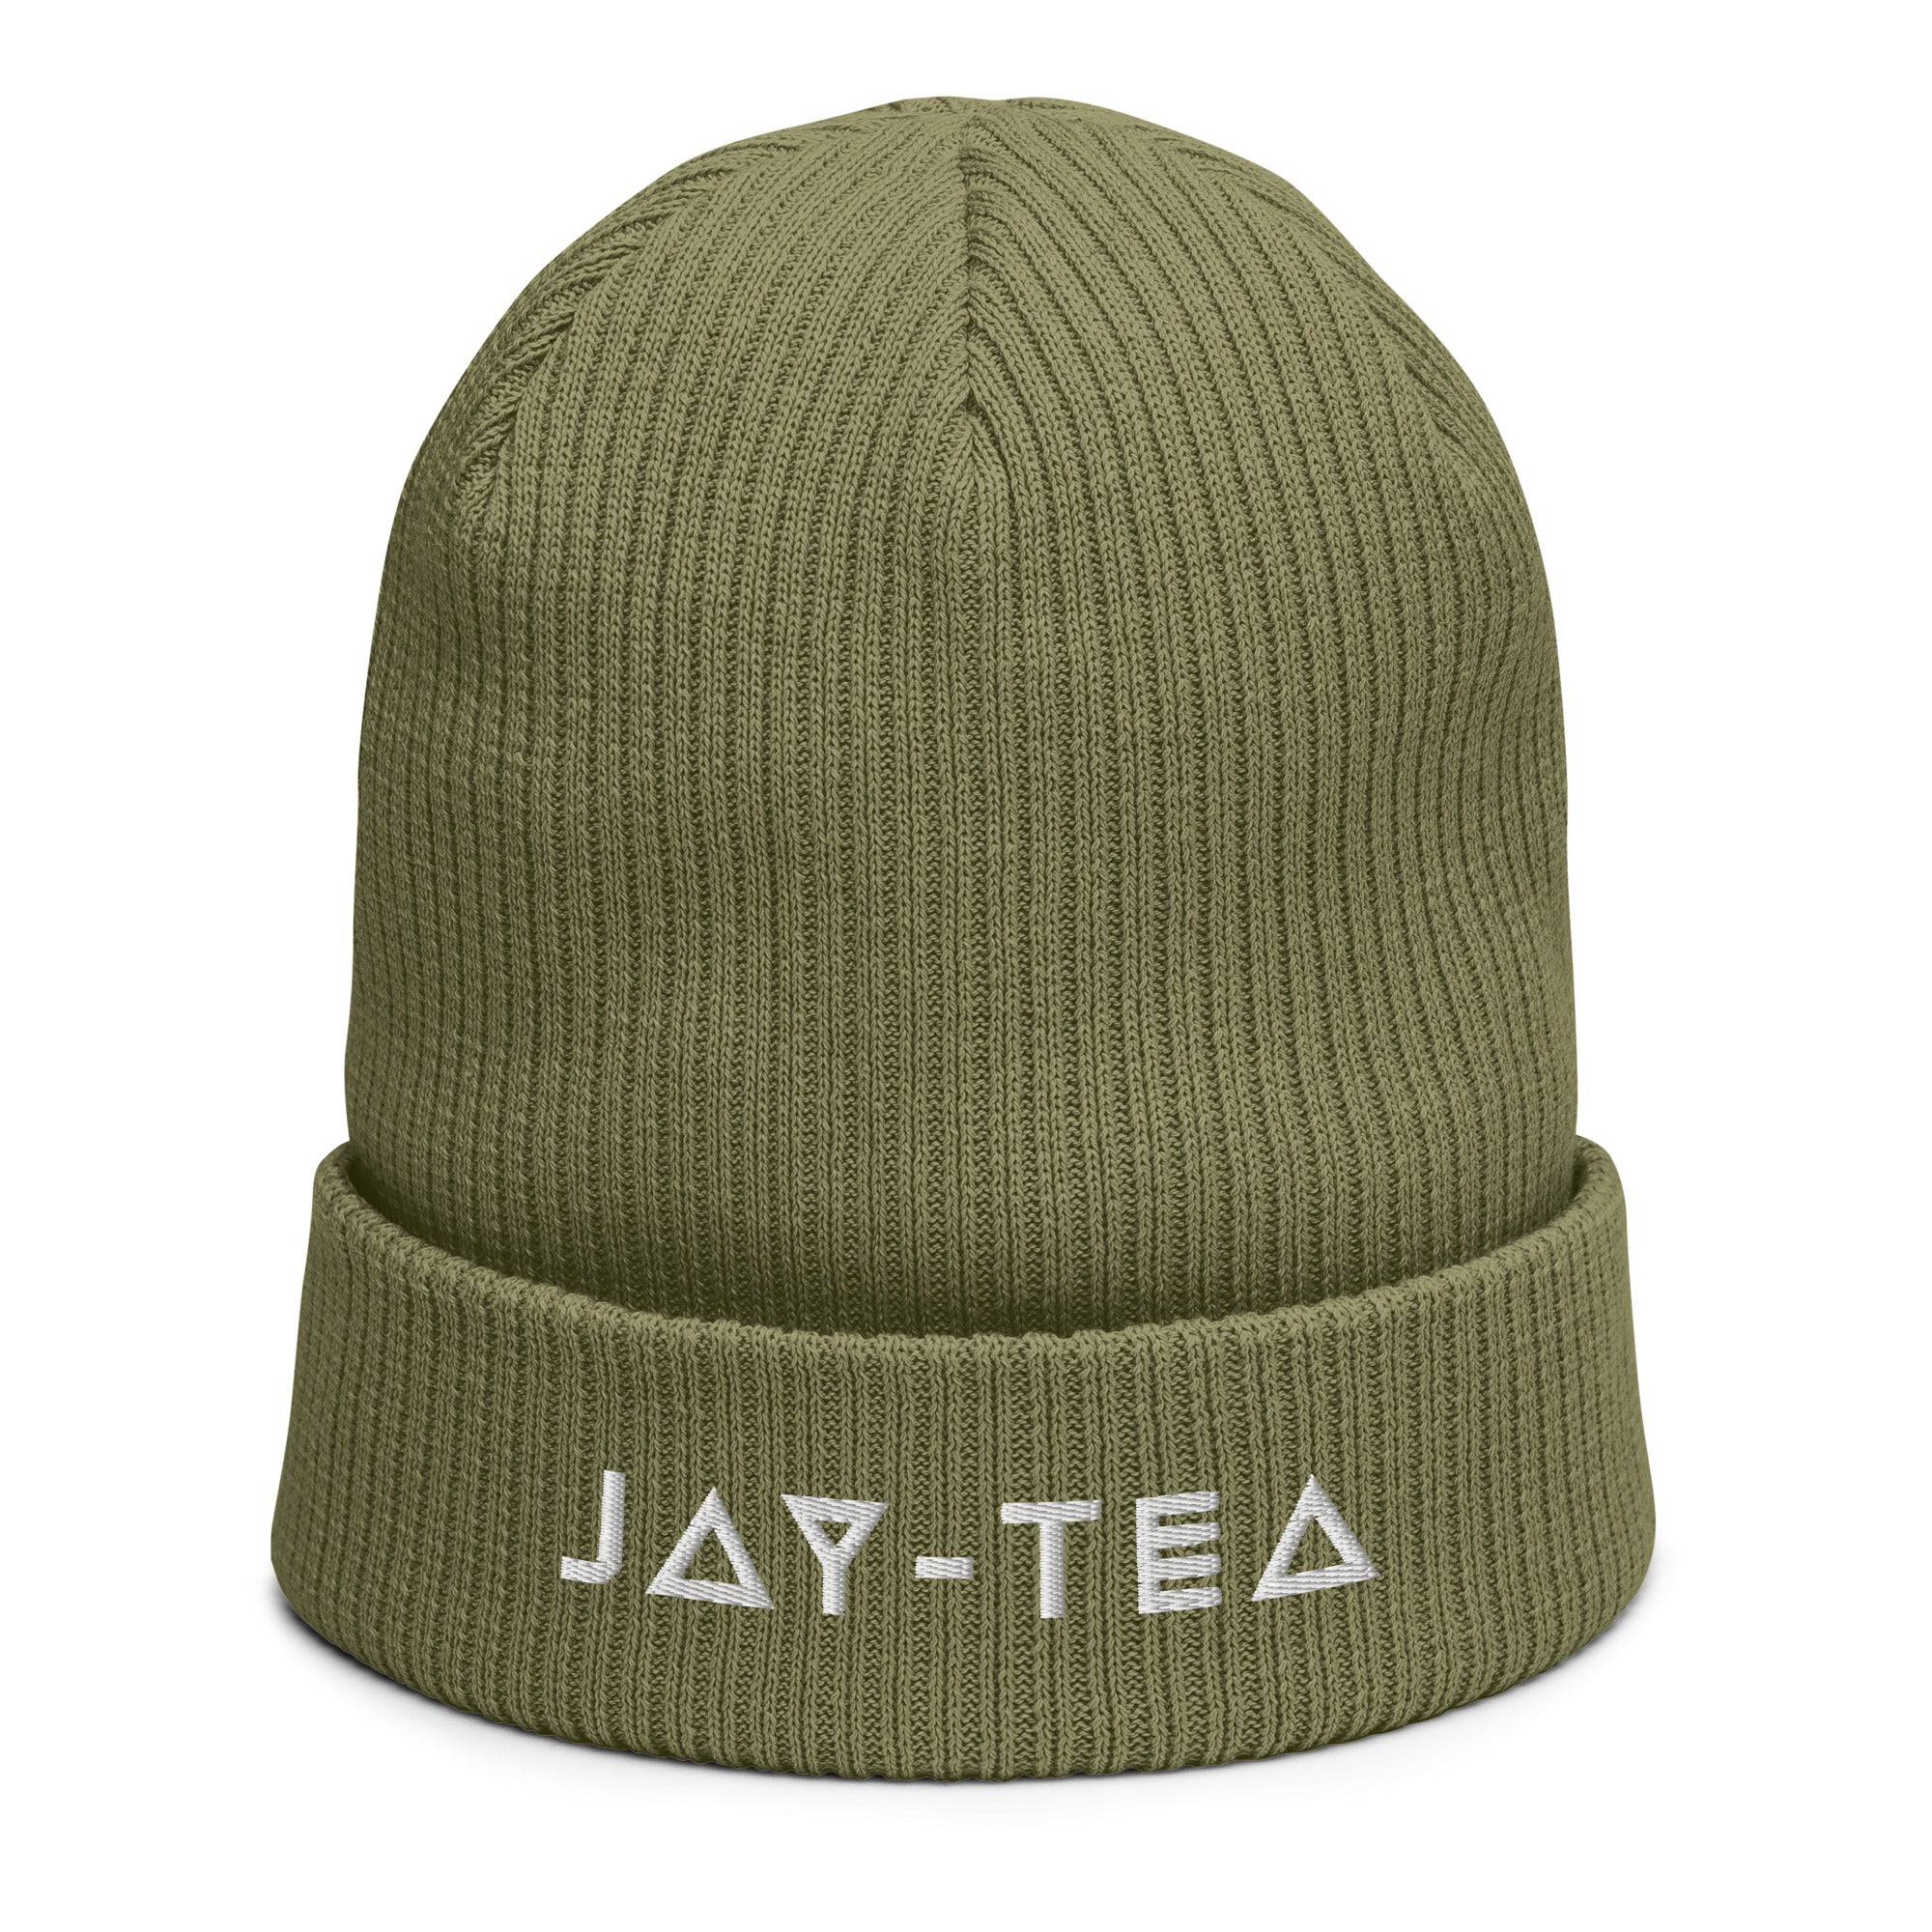 Gerippte Mütze | Jay-Tea Originals - Jay-Tea - Jay-Tea